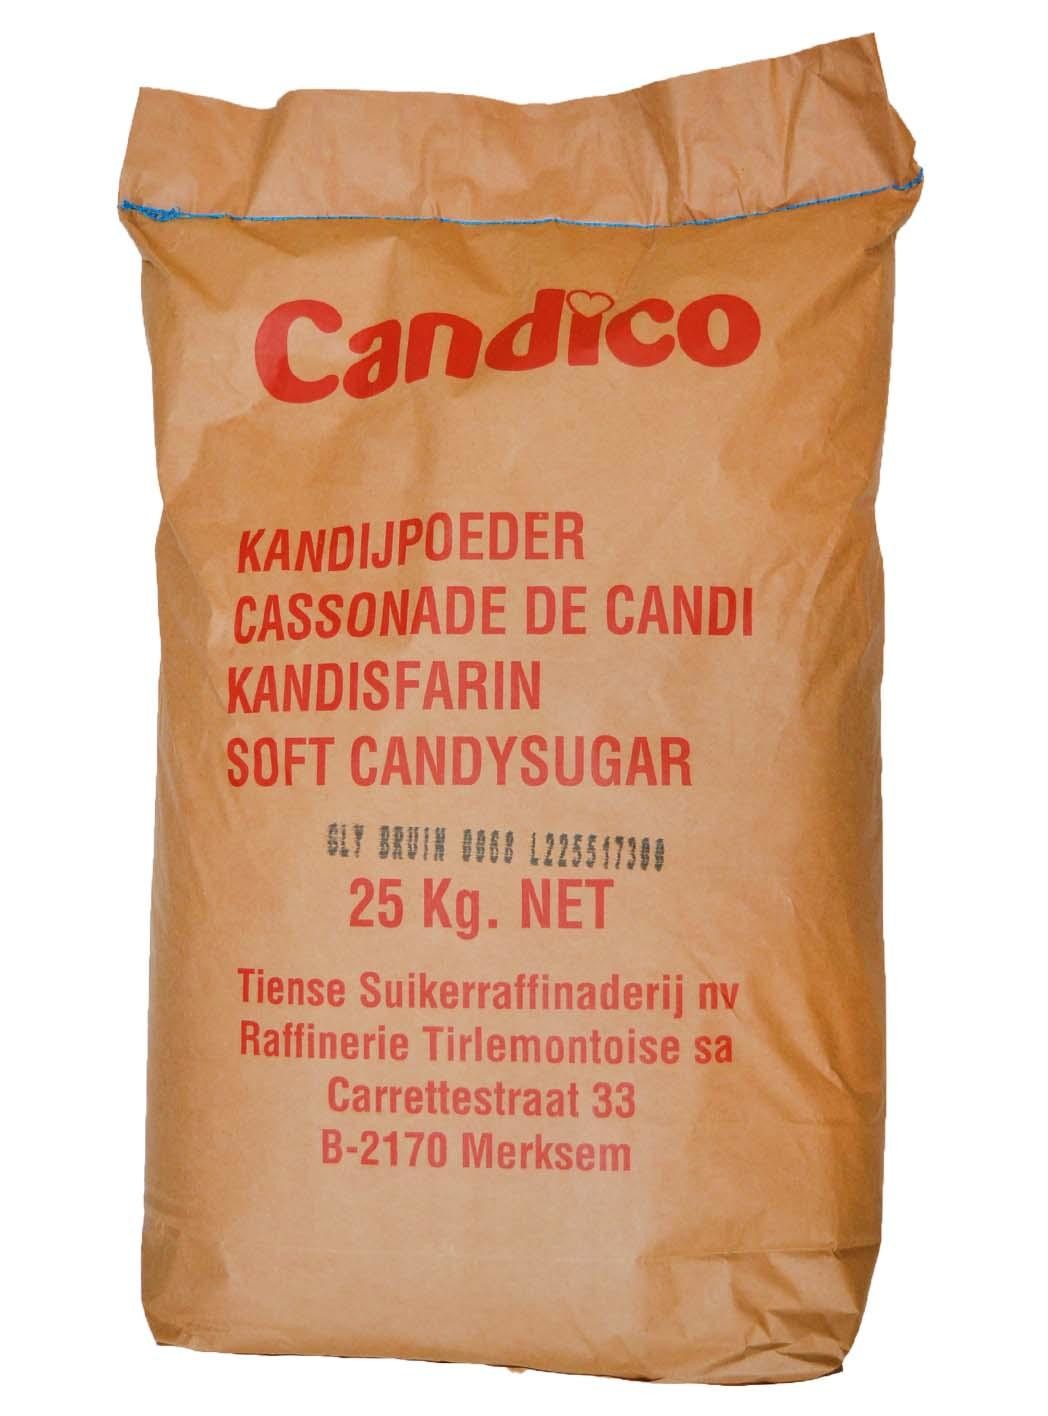 Cassonade de candi blonde 1kg Candico - Nevejan